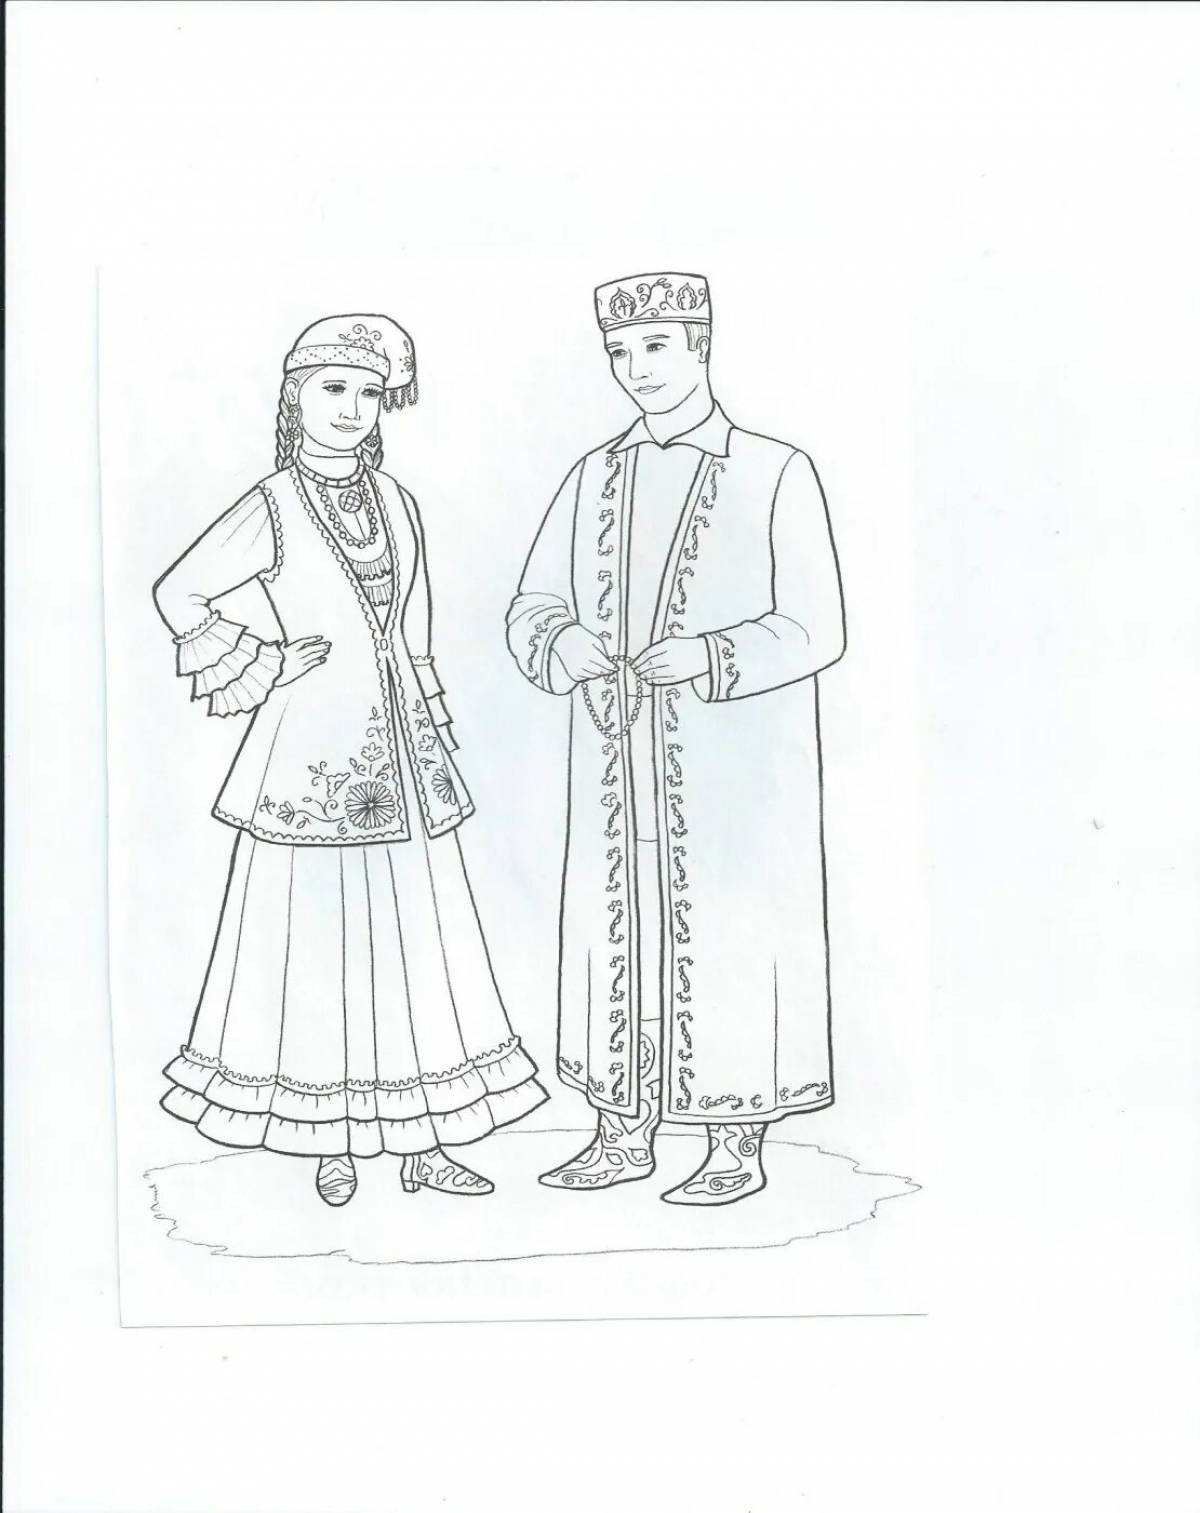 Bashkir national costume #1